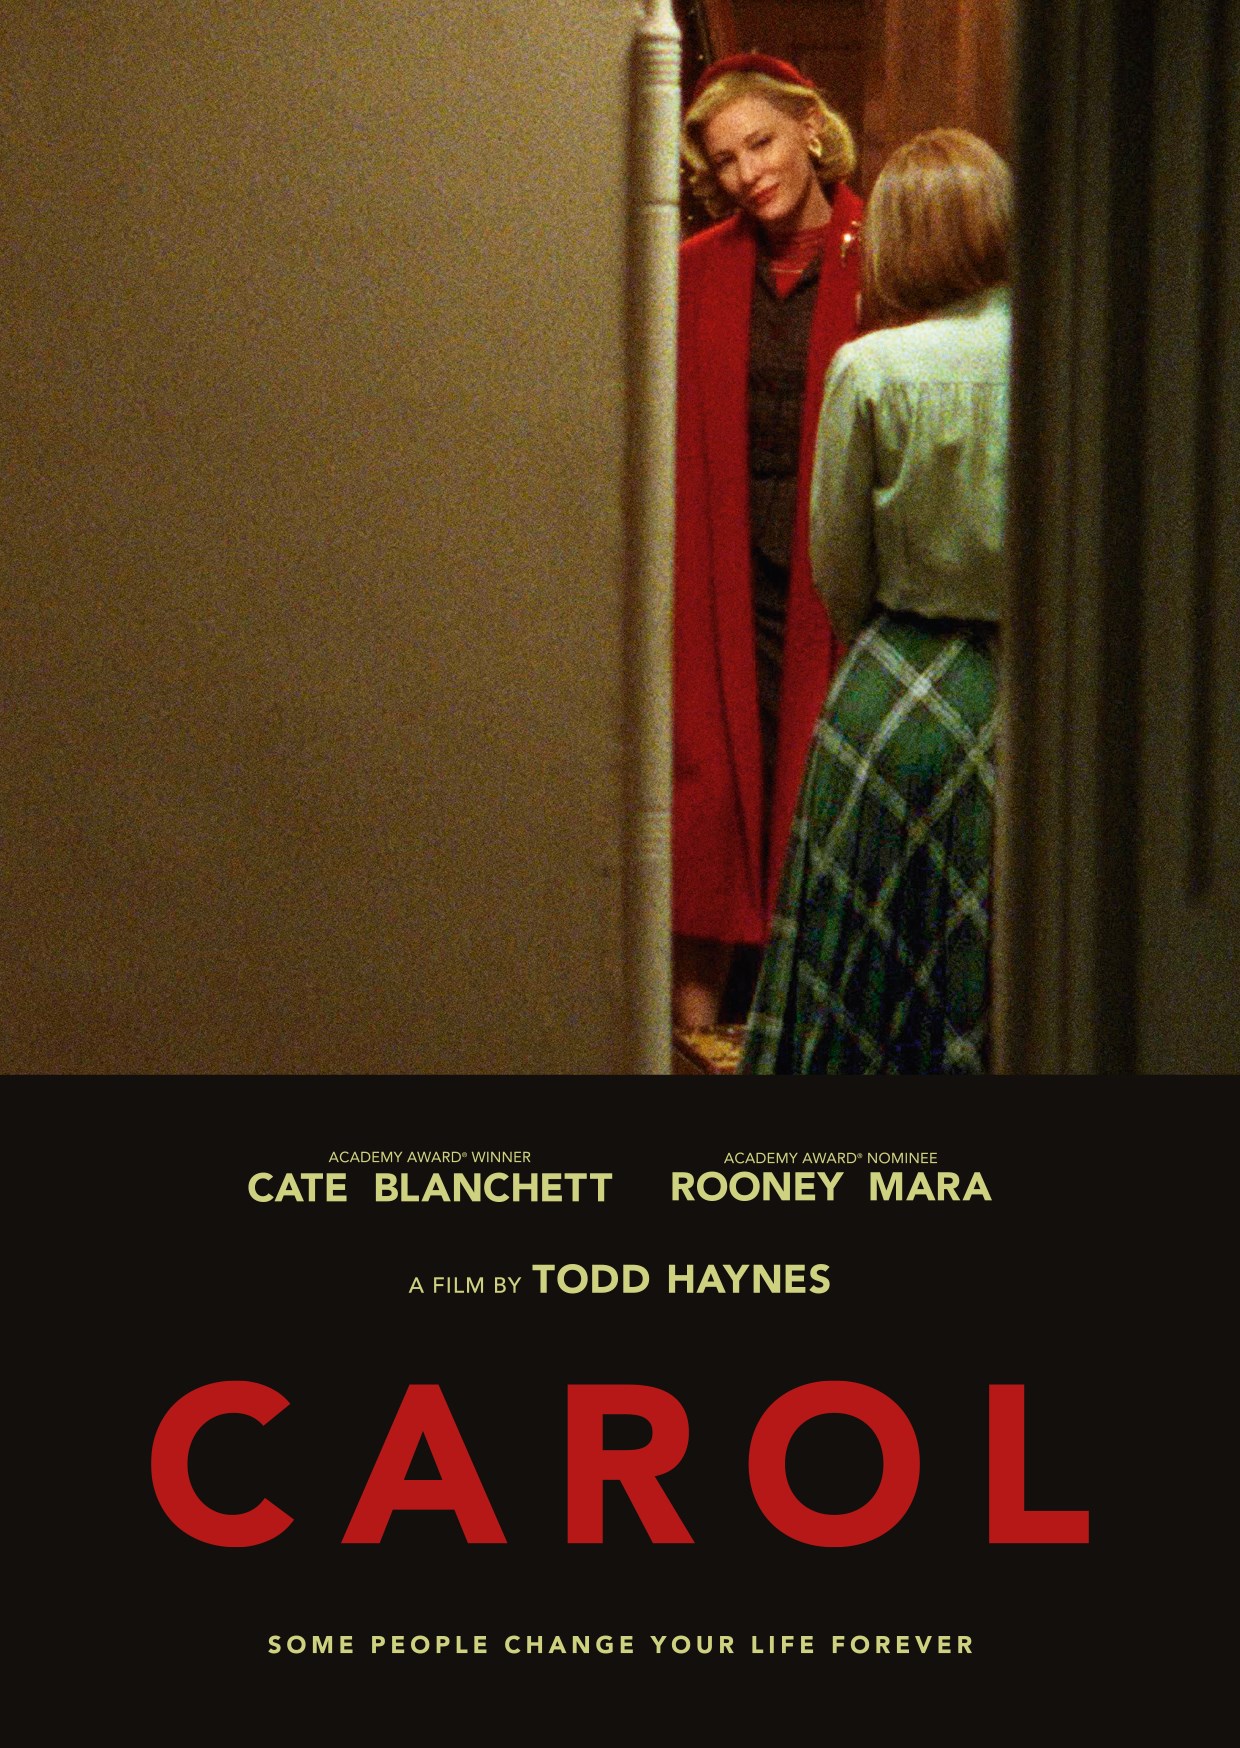 68- Carol (Todd Haynes, 2015)